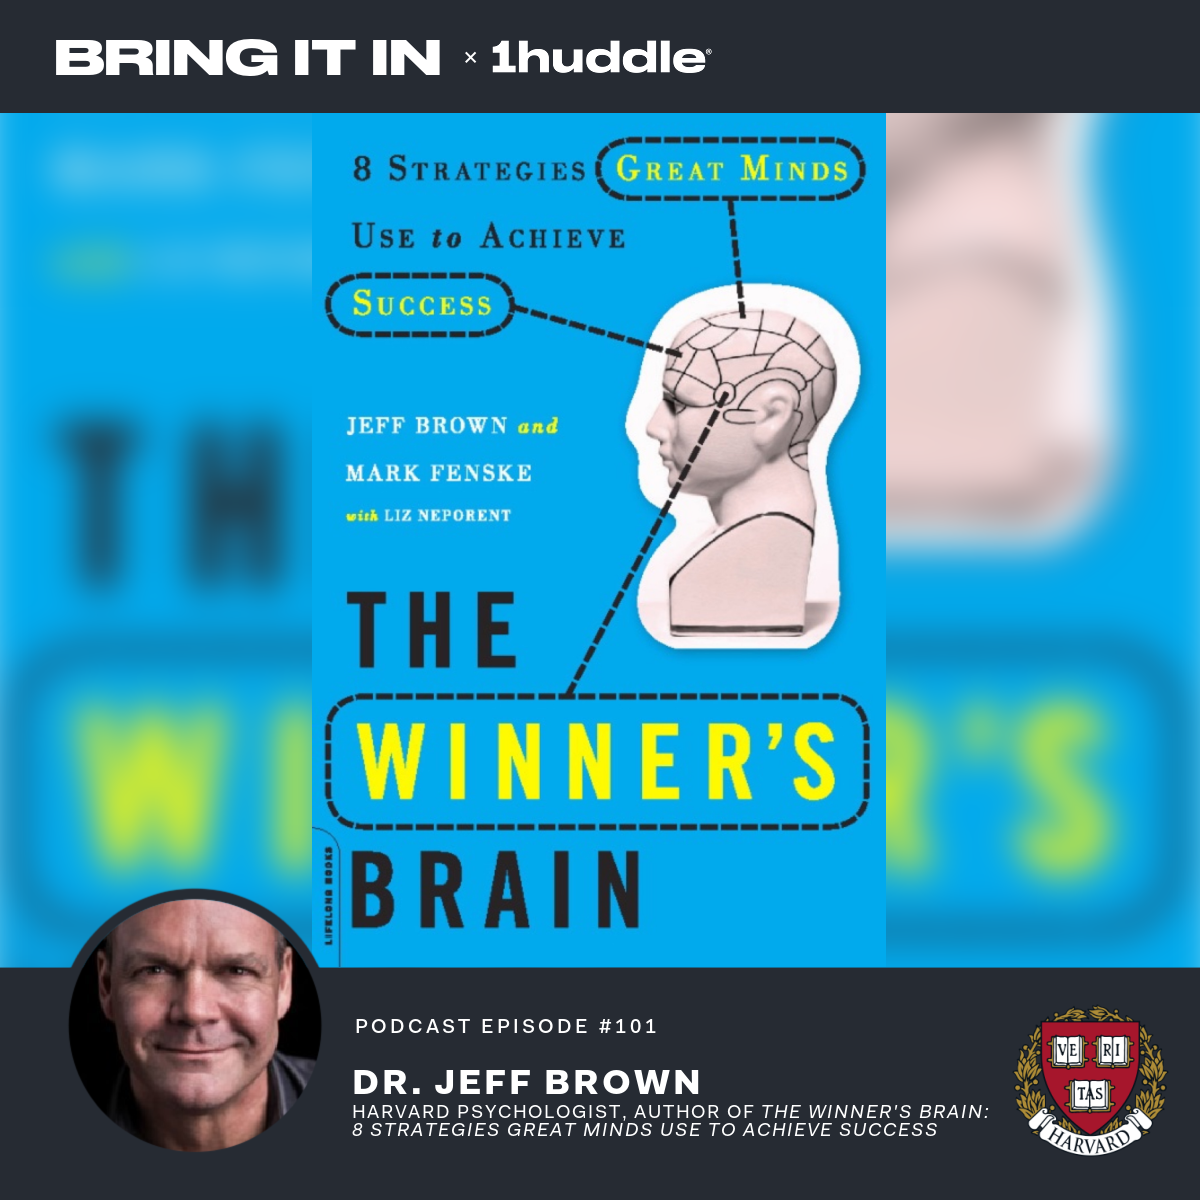 Harvard Psychologist, Psychologist for the Boston Marathon Medical Team, Author of “The Winner’s Brain”